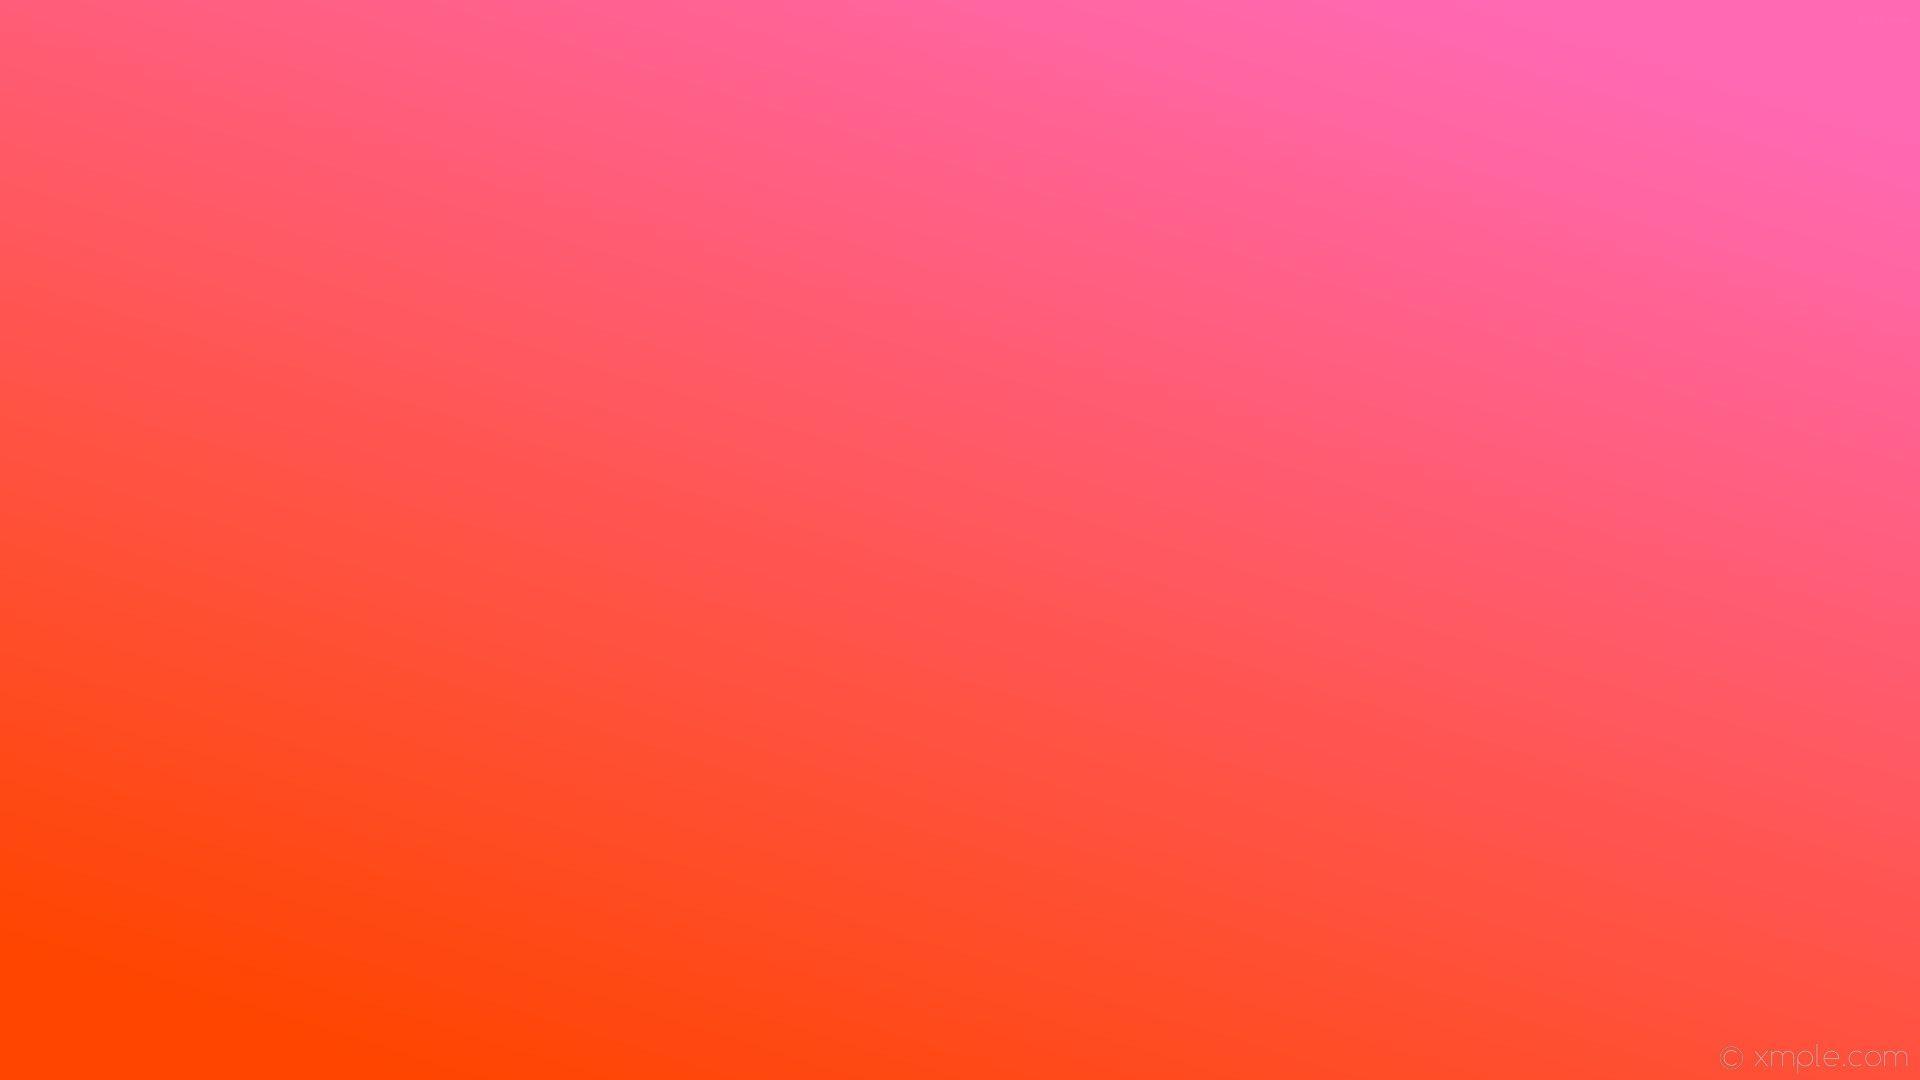 Orange To Pink Wallpapers - Wallpaper Cave